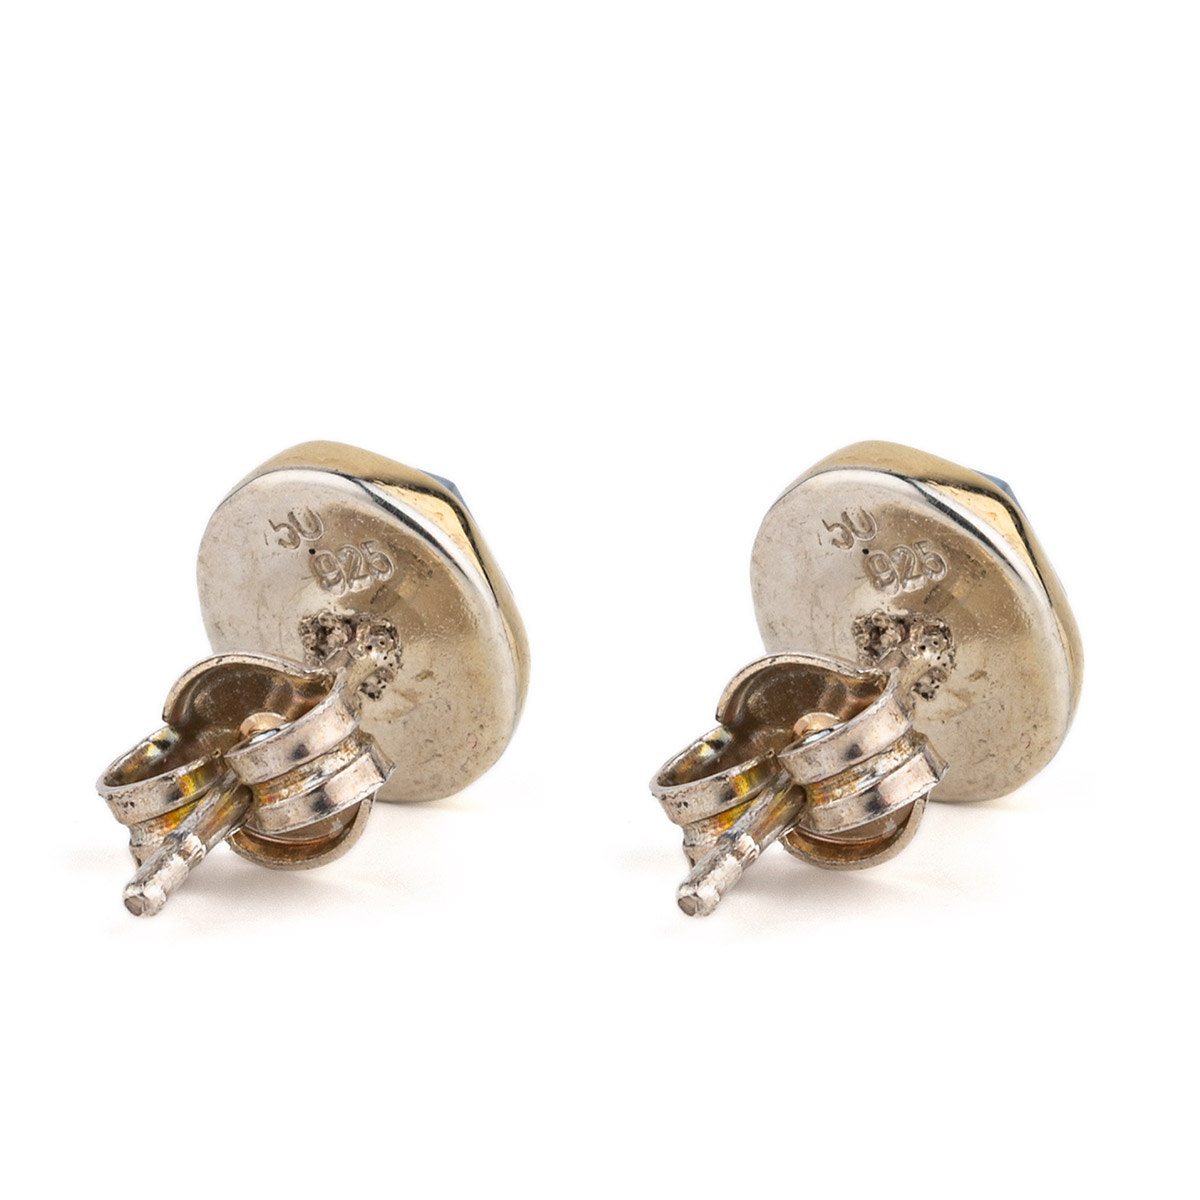 London Topaz Earrings – 18K Gold and Sterling Silver - GREEK ROOTS